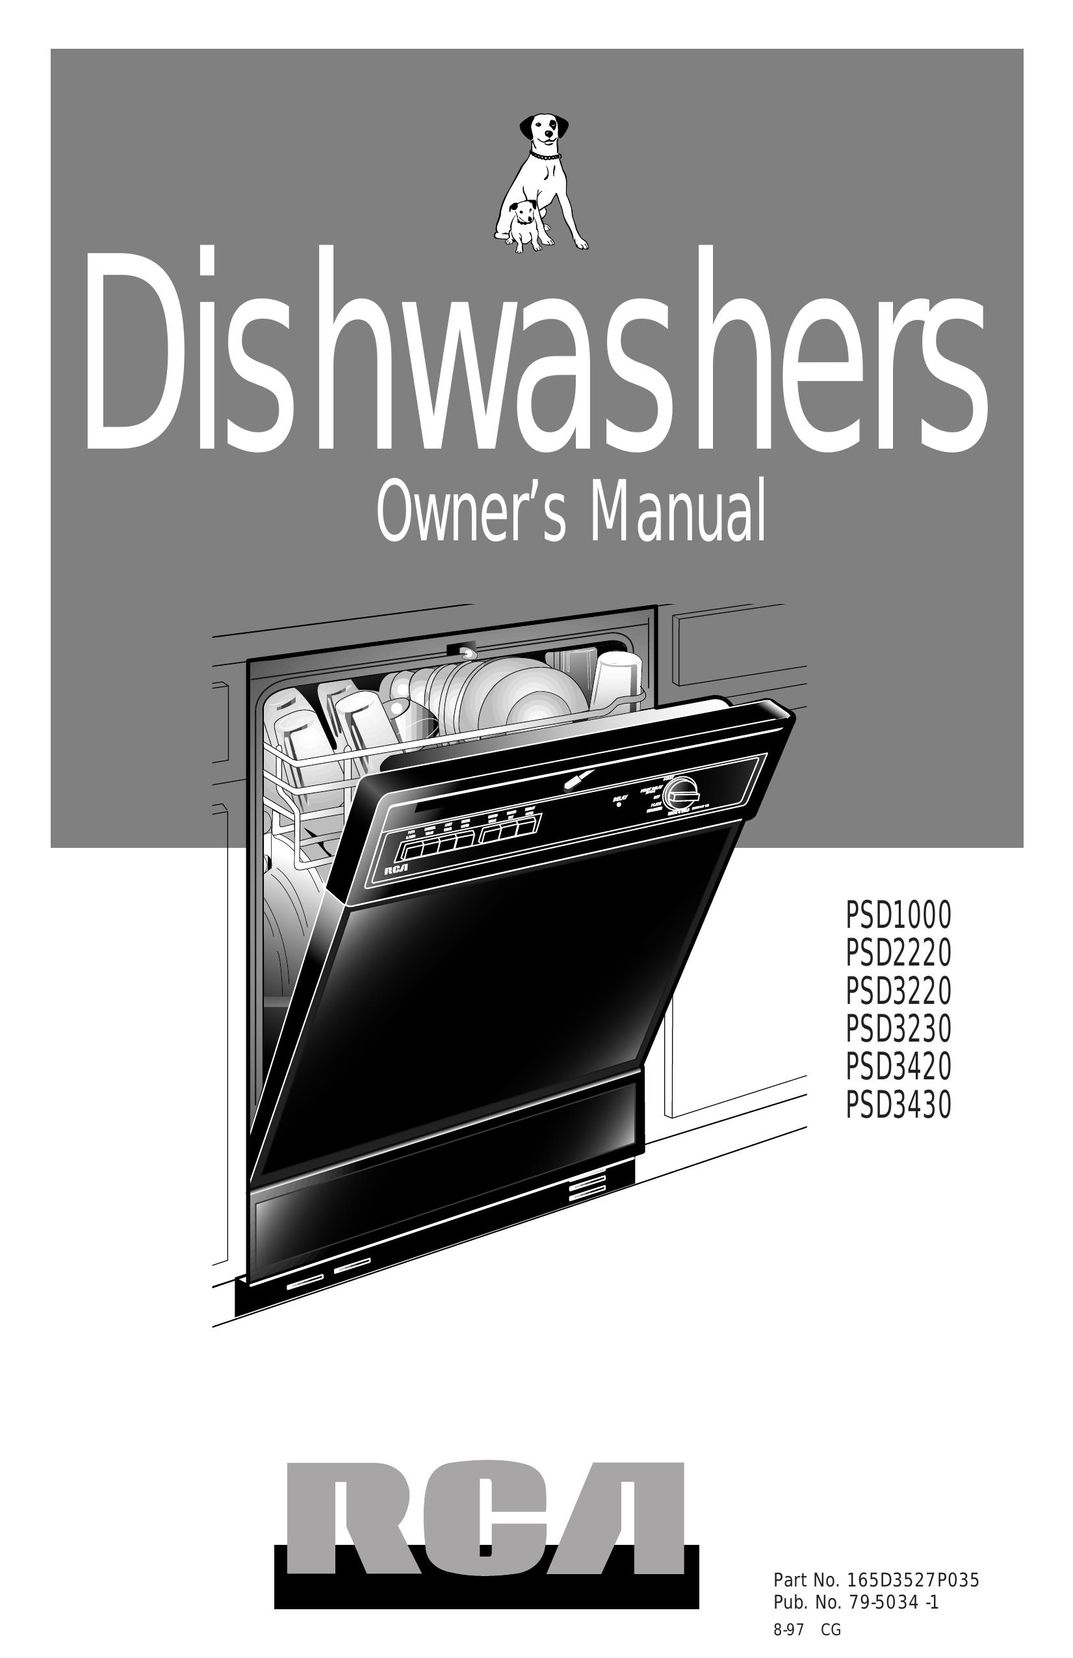 RCA PSD3230 Dishwasher User Manual